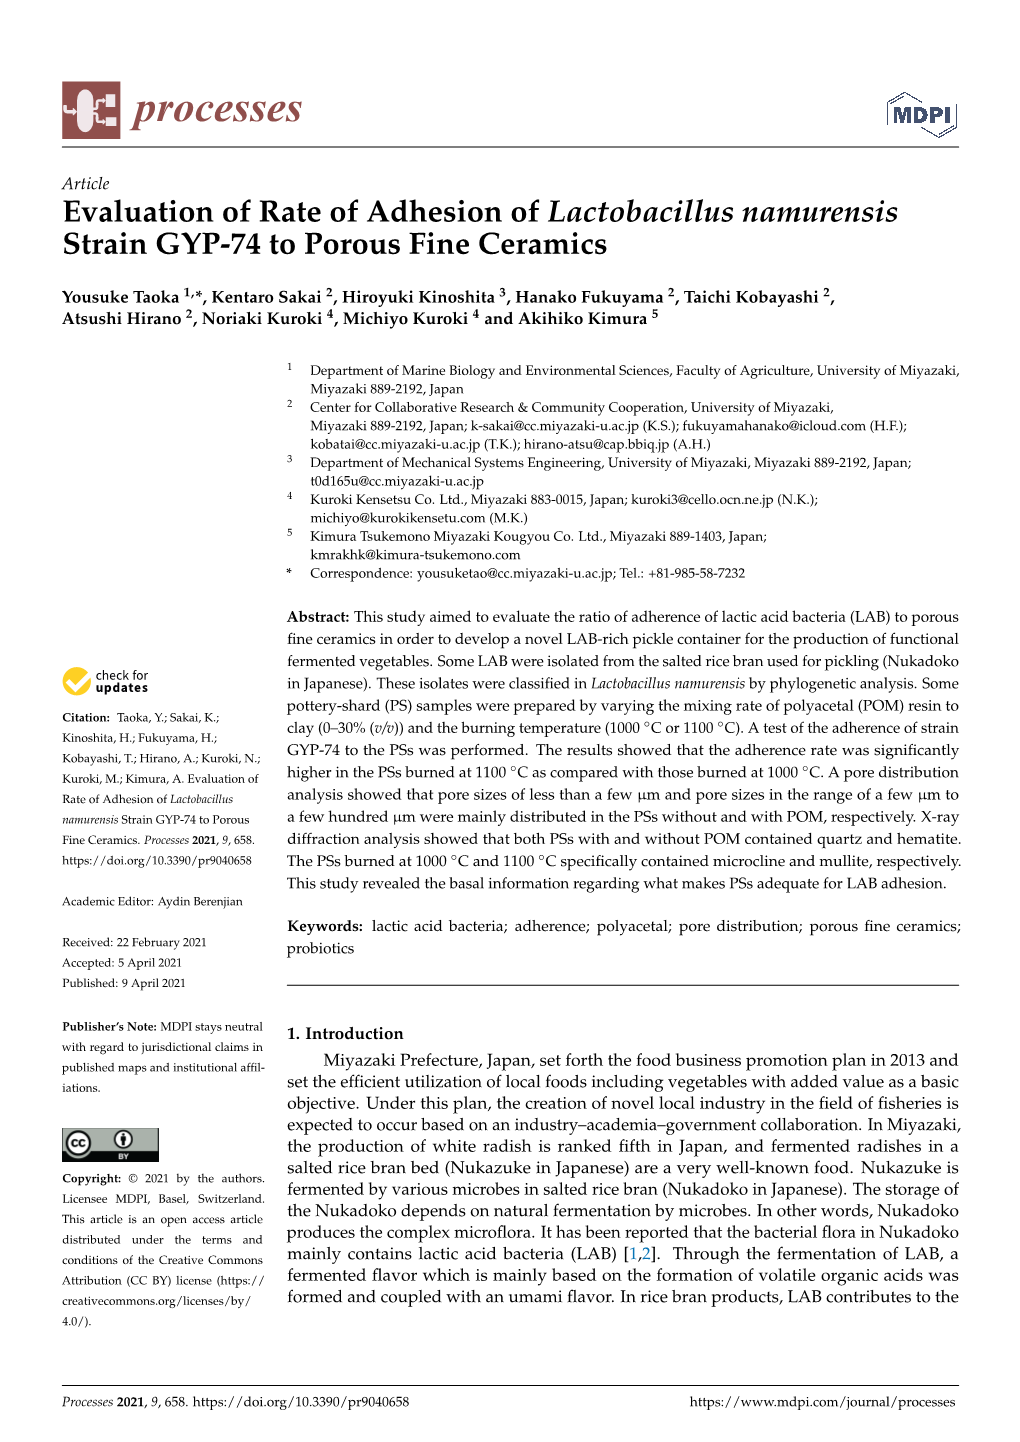 Evaluation of Rate of Adhesion of Lactobacillus Namurensis Strain GYP-74 to Porous Fine Ceramics